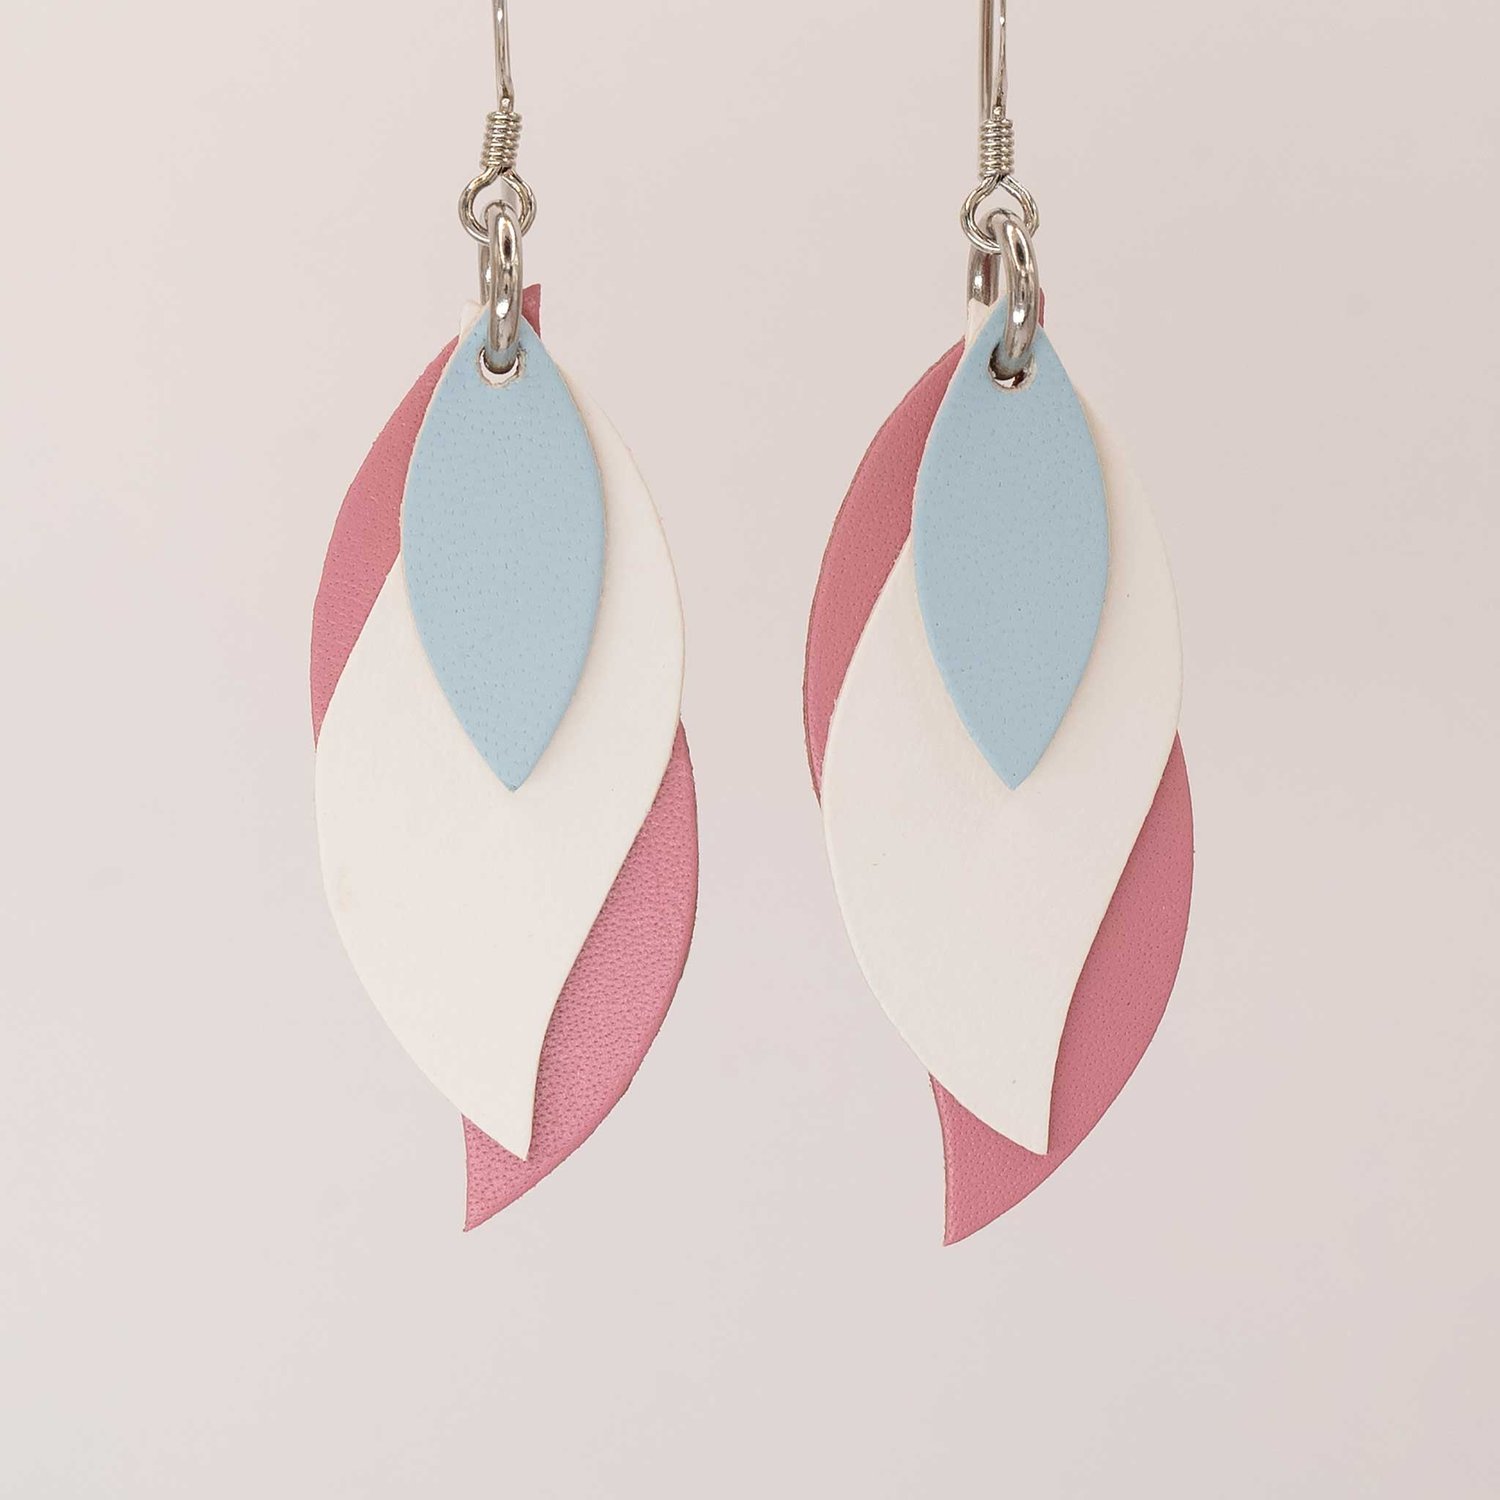 Image of Handmade Australian leather leaf earrings - Powder blue, white, pink [LBP-051]